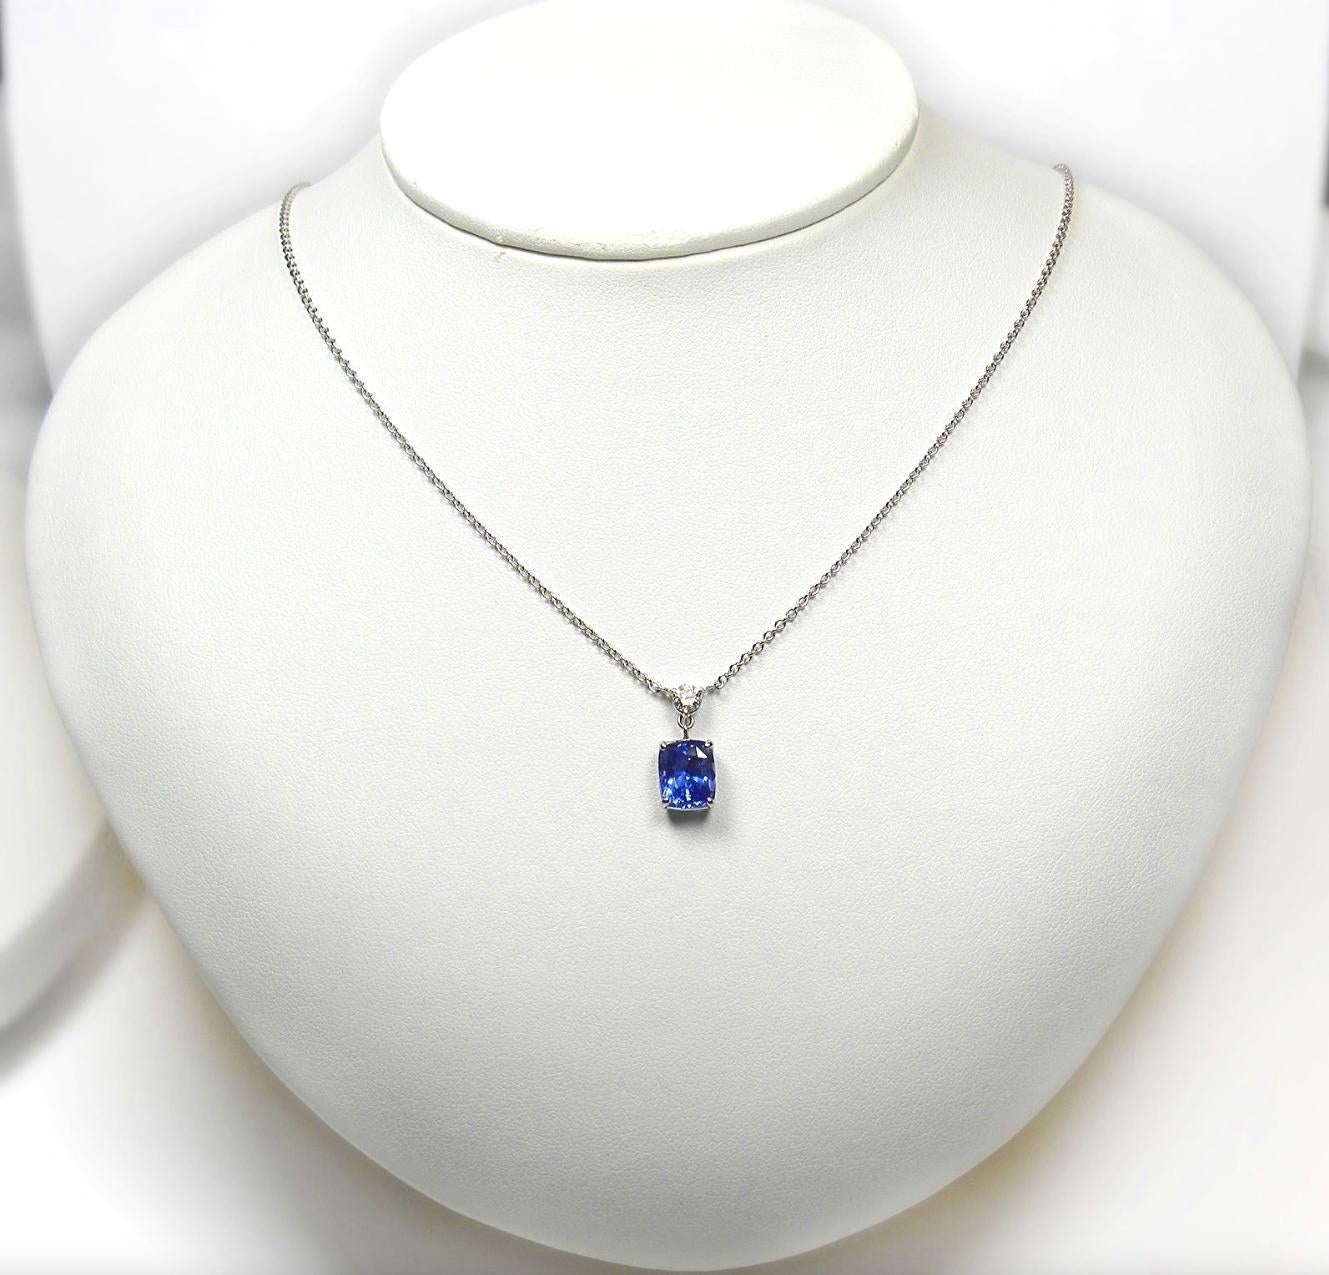 Contemporary 4.15 Carat Natural Blue Sapphire and Diamond Pendant Necklace Platinum 950